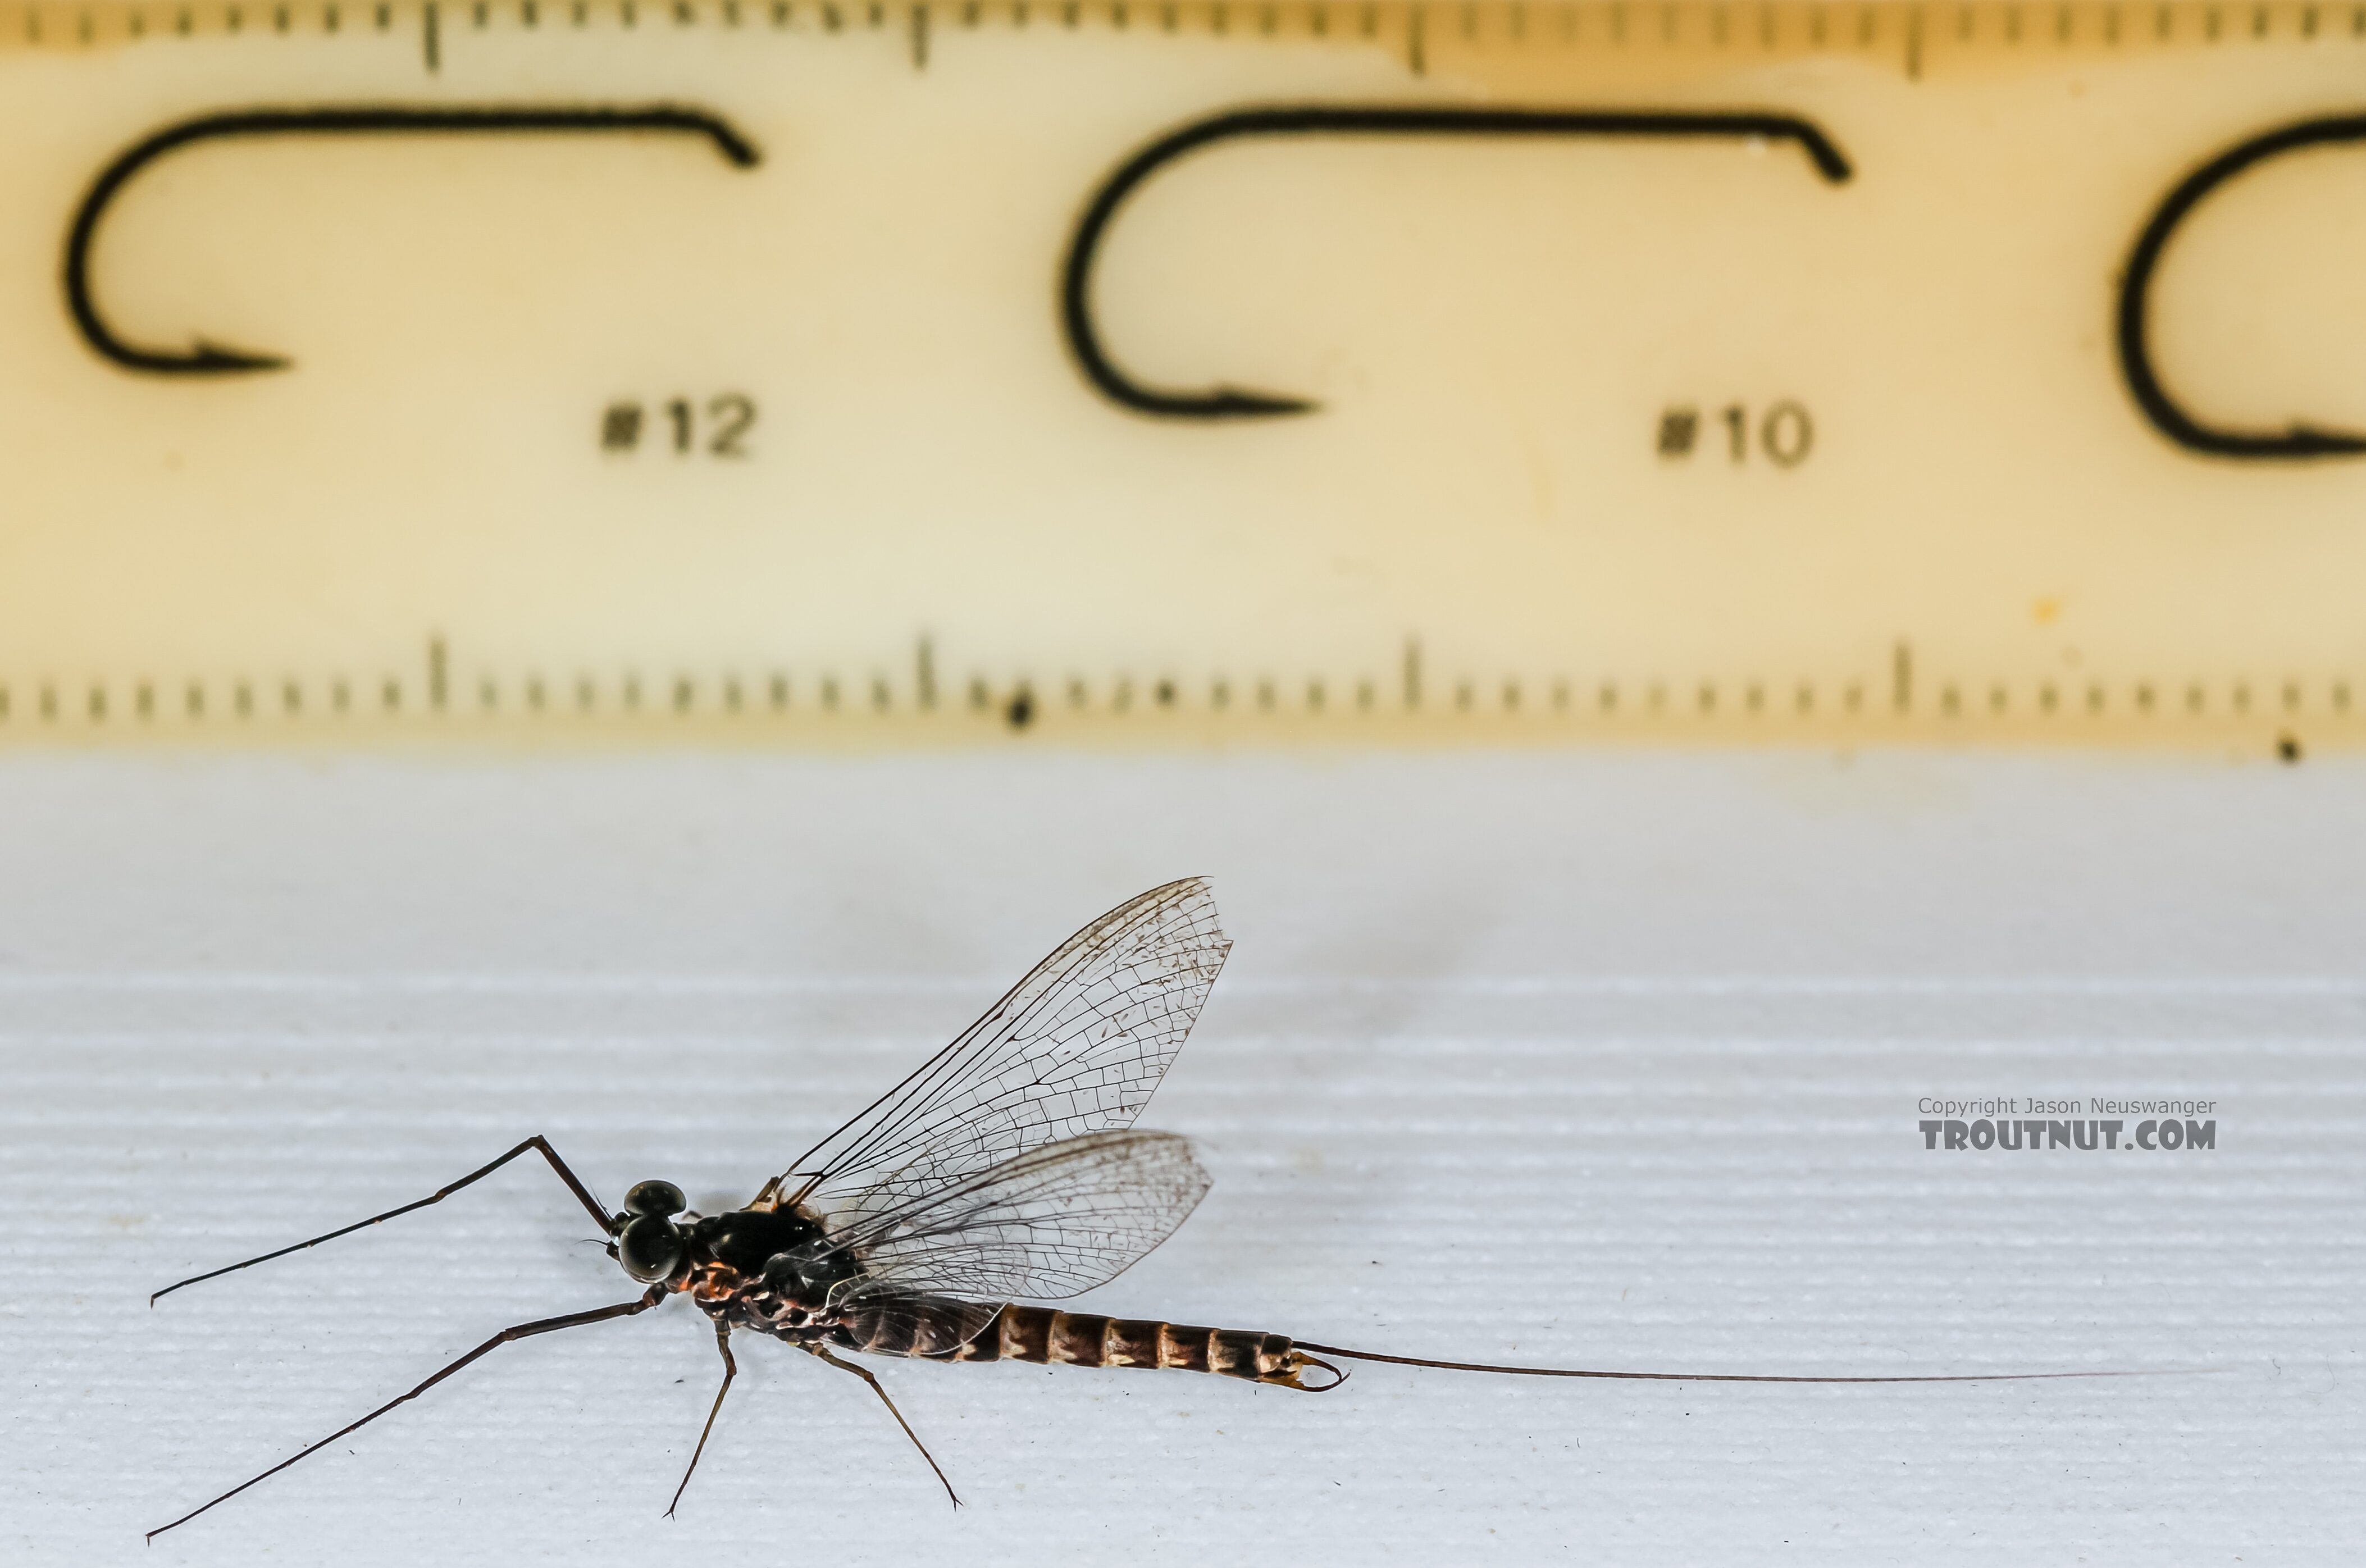 Male Siphlonurus occidentalis (Gray Drake) Mayfly Spinner from the Henry's Fork of the Snake River in Idaho